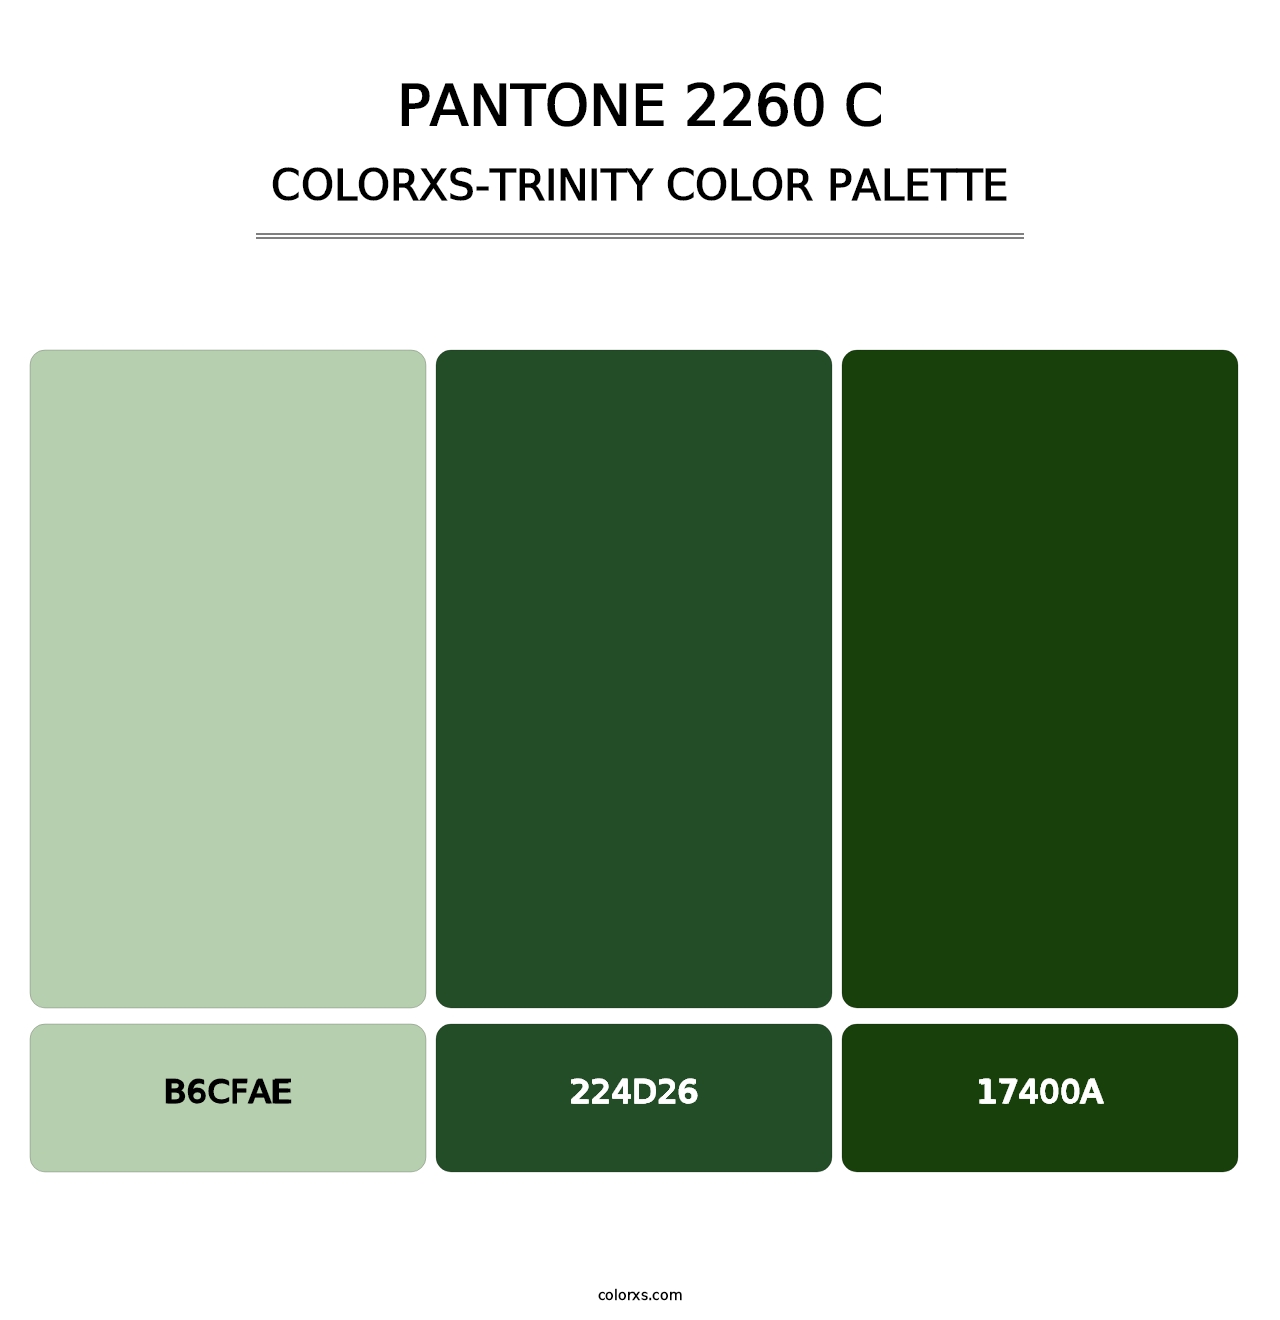 PANTONE 2260 C - Colorxs Trinity Palette